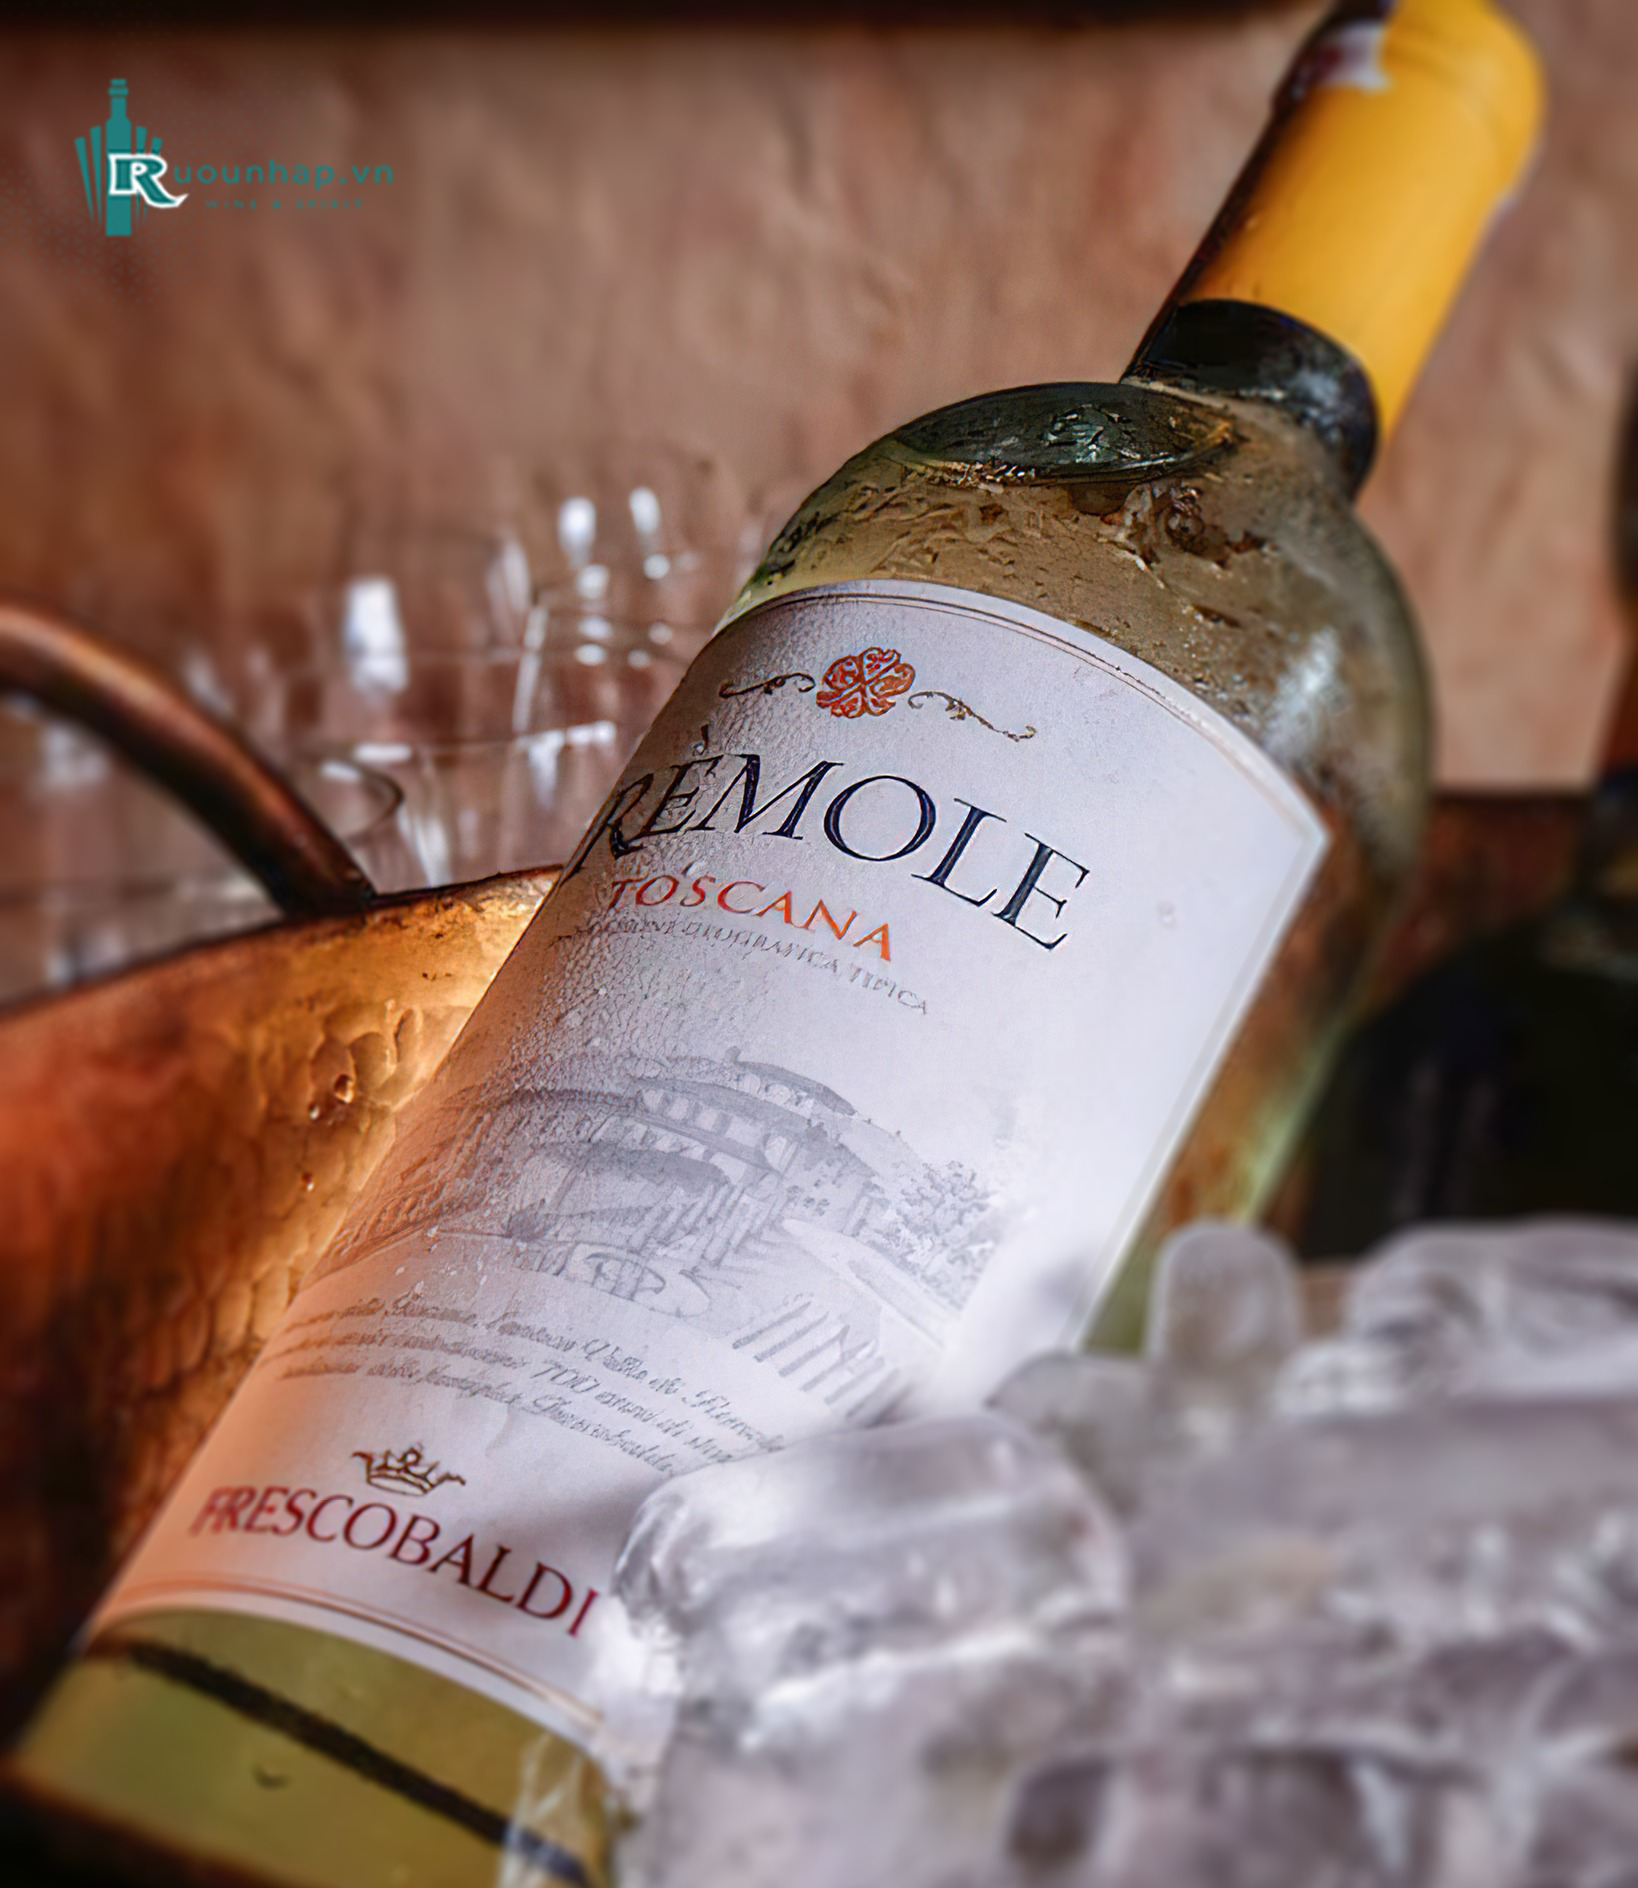 Rượu Vang Remole Toscana Bianco